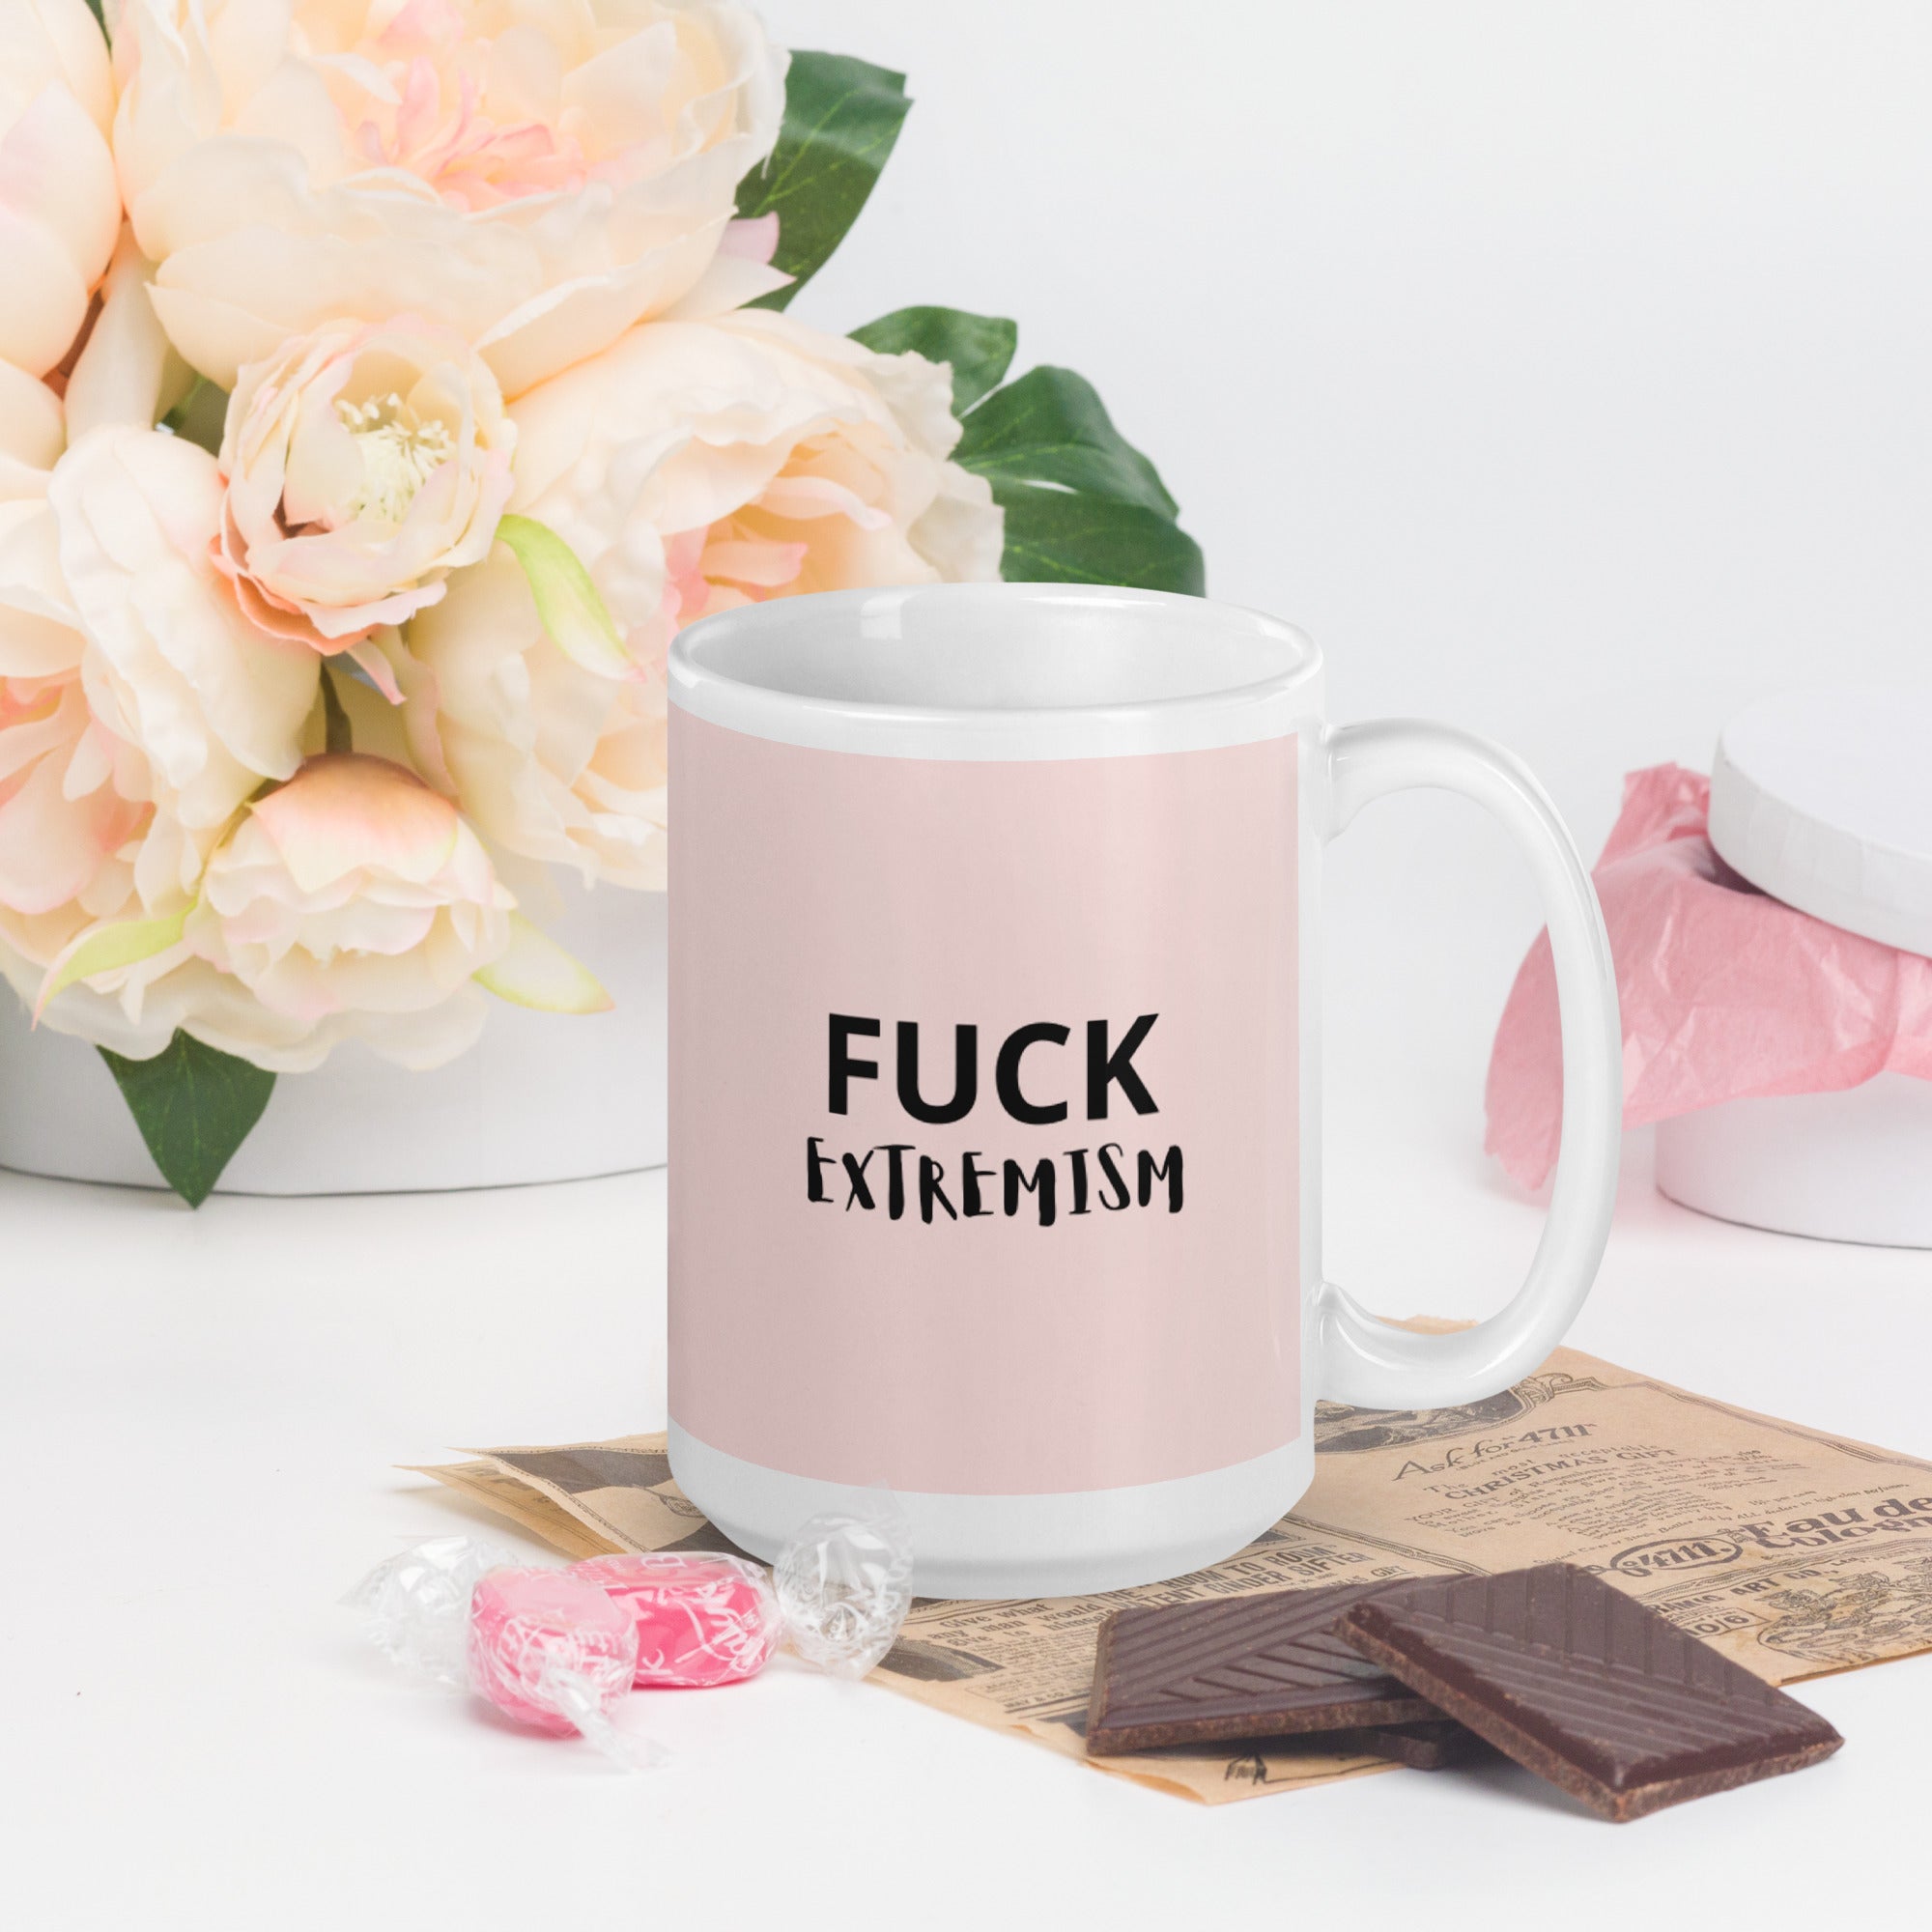 Fuck Extremism mug pink